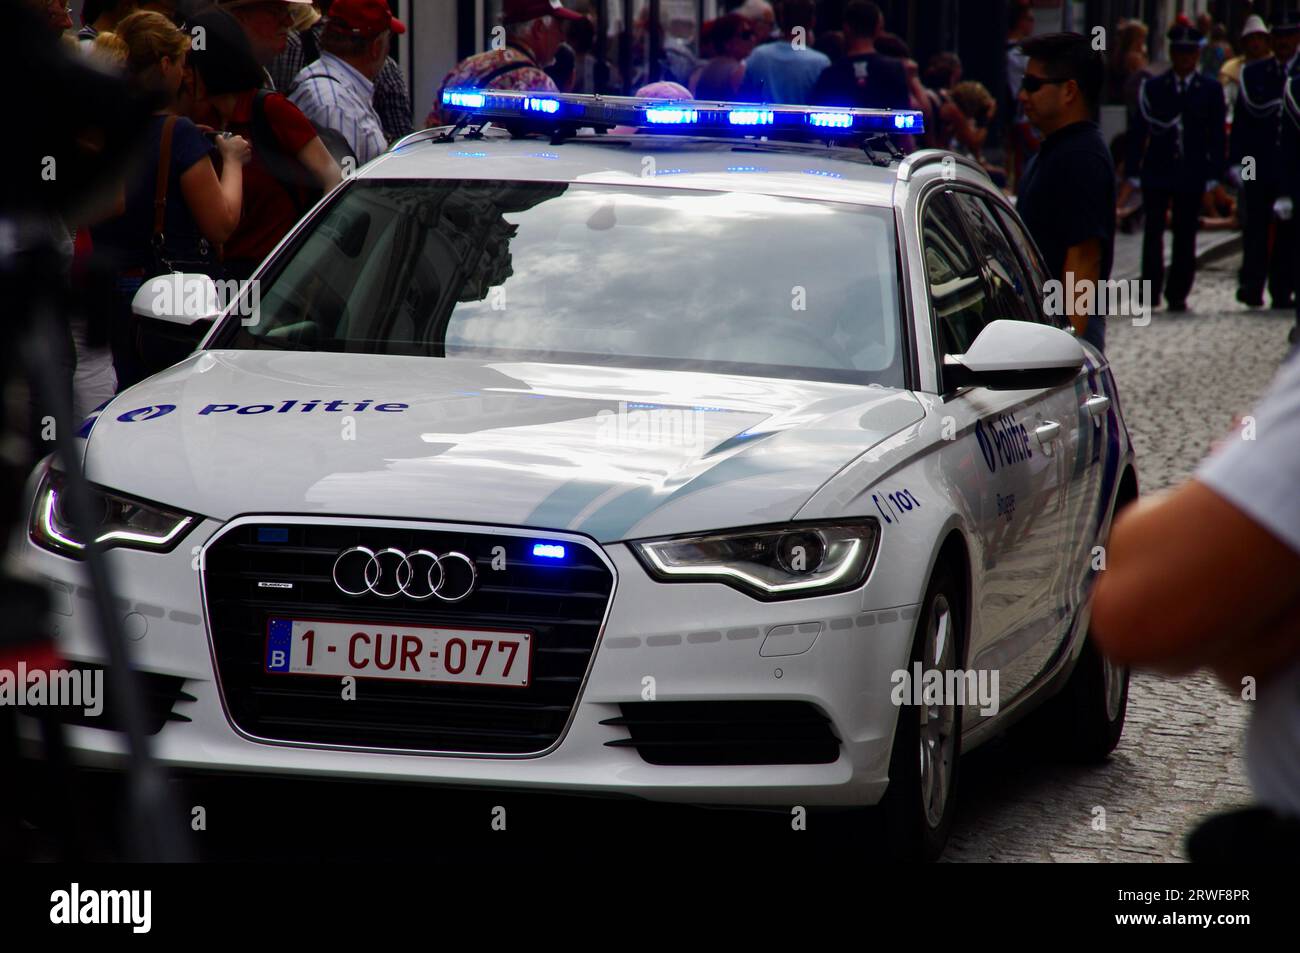 Belgian Audi Police Car. Bruges, Belgium Stock Photo - Alamy